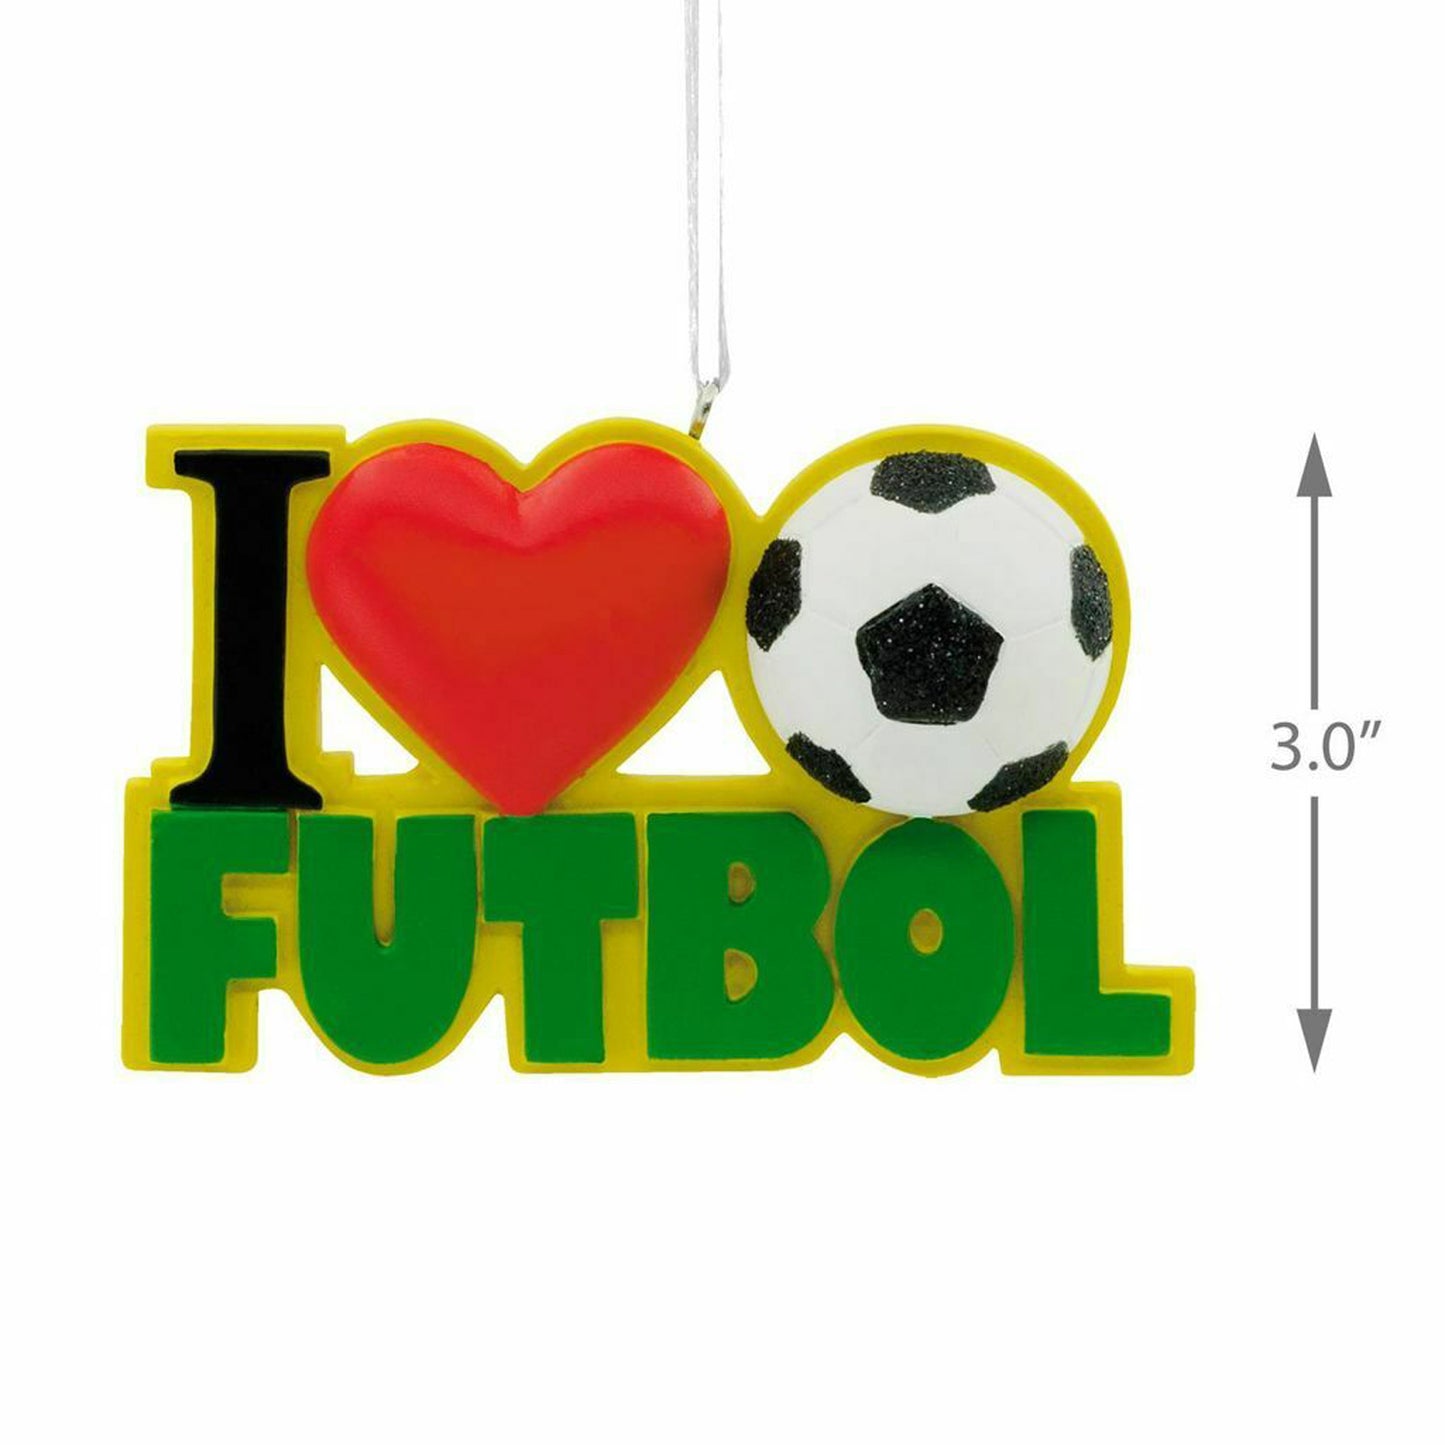 Hallmark Christmas Holiday Ornament Spanish I Love Futbol with Red Heart & Soccer Ball